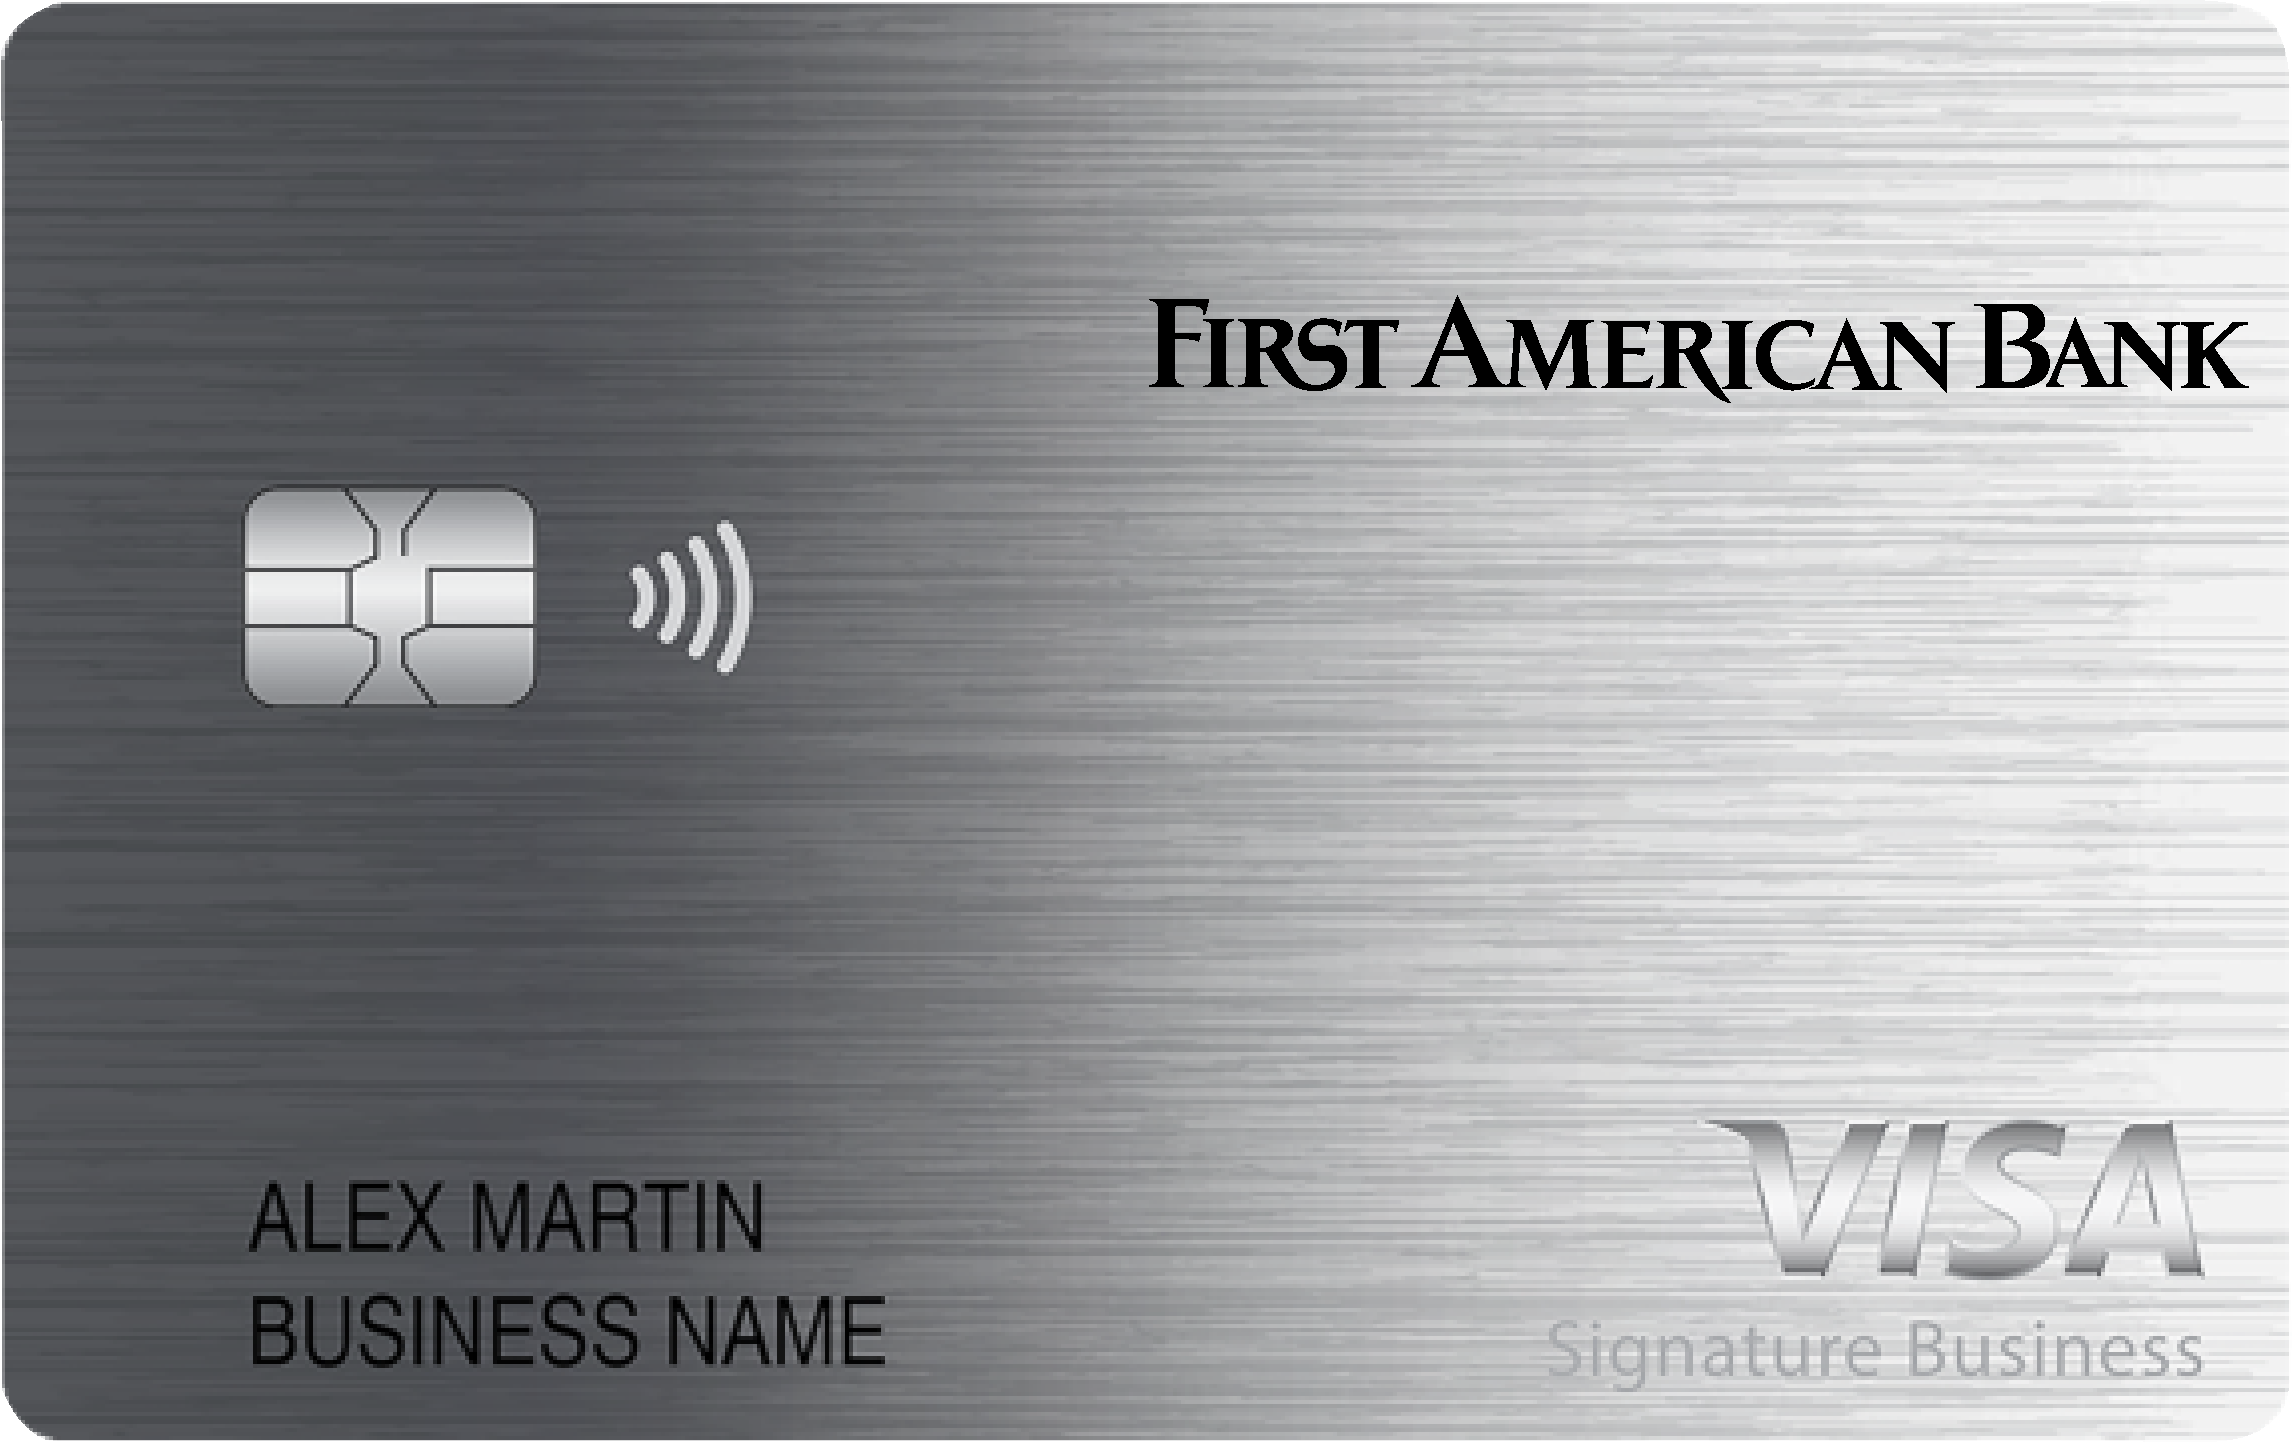 First American Bank Smart Business Rewards Card